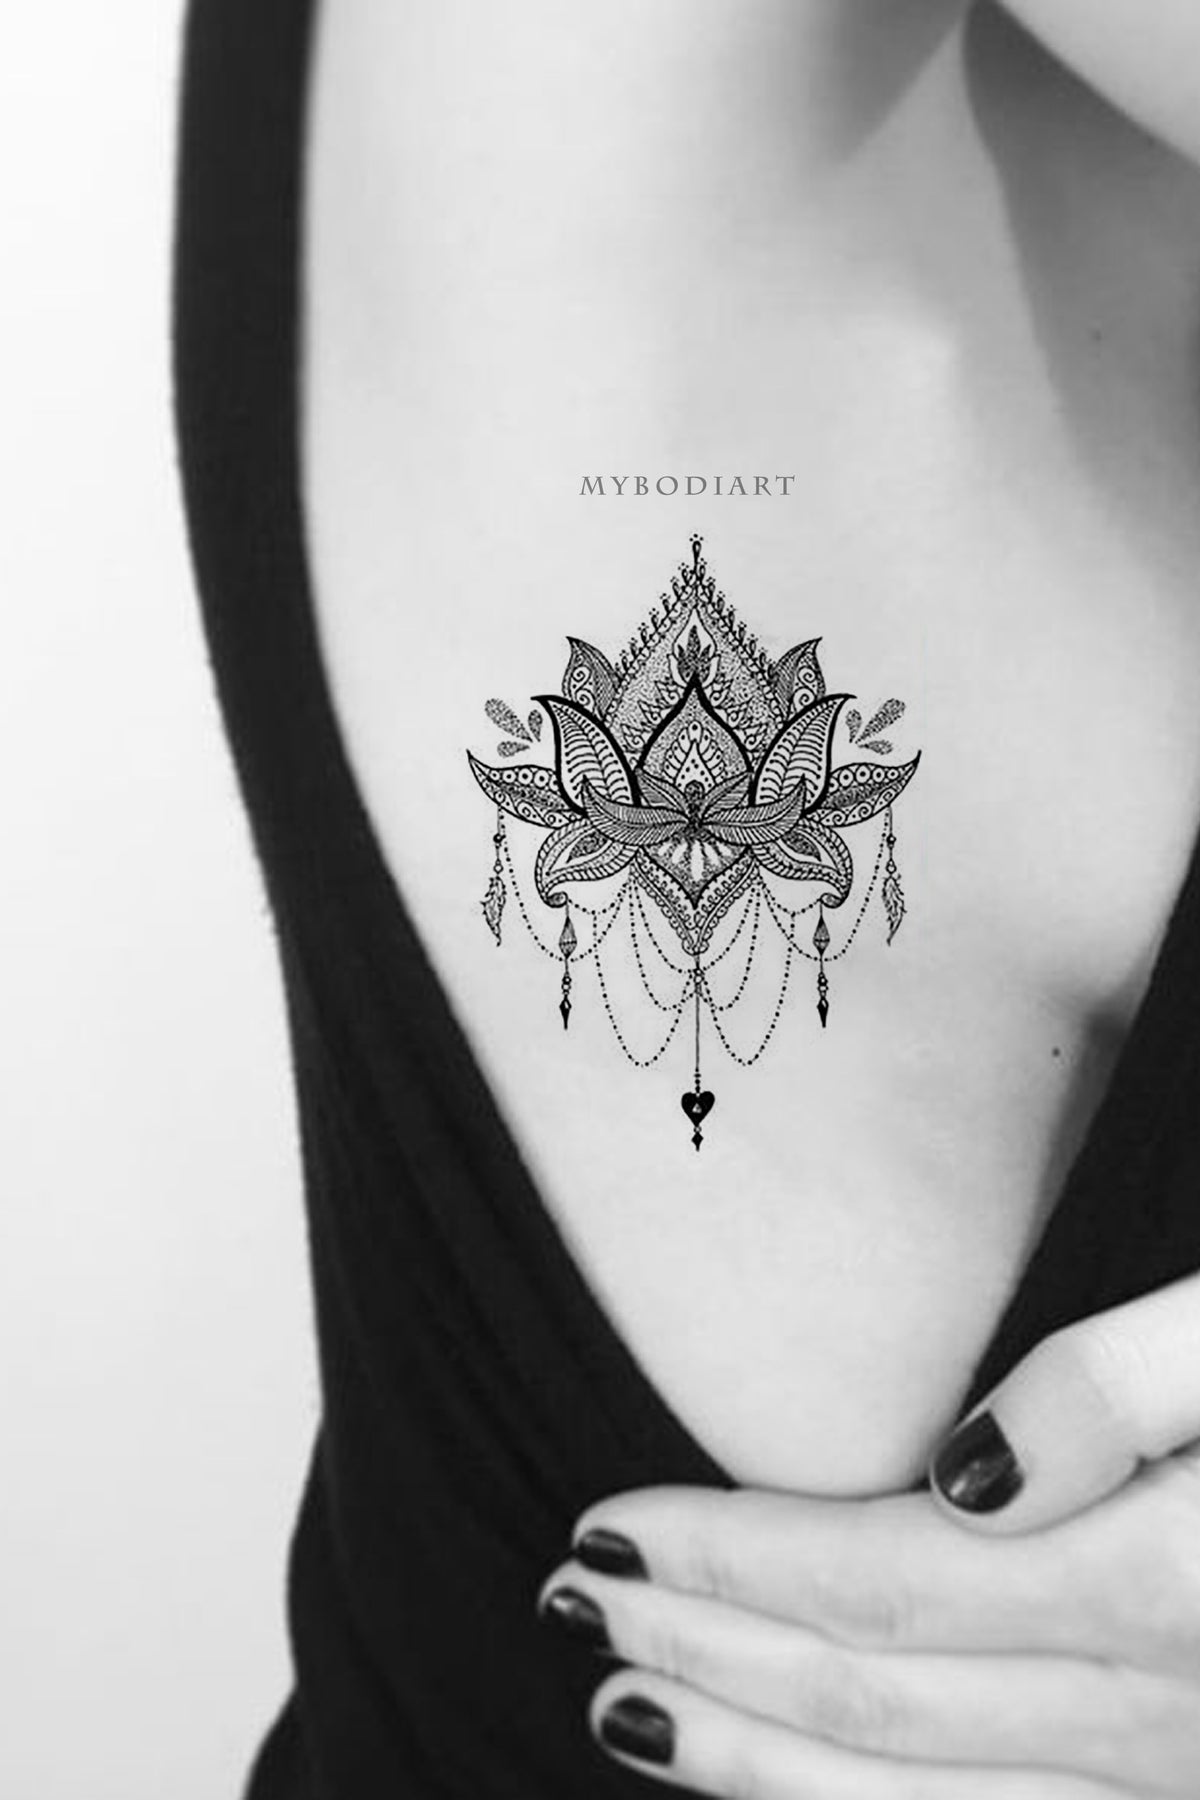 Momeski Temporary Tattoo Sets - 7 Sheets Neck, Small Face, Bohemian, Lace  Tribal Tattoos, Lotus Moon Flower Girl Tattoo Skin for Women (Black) - Fake  Tattoo Stickers : Amazon.de: Beauty